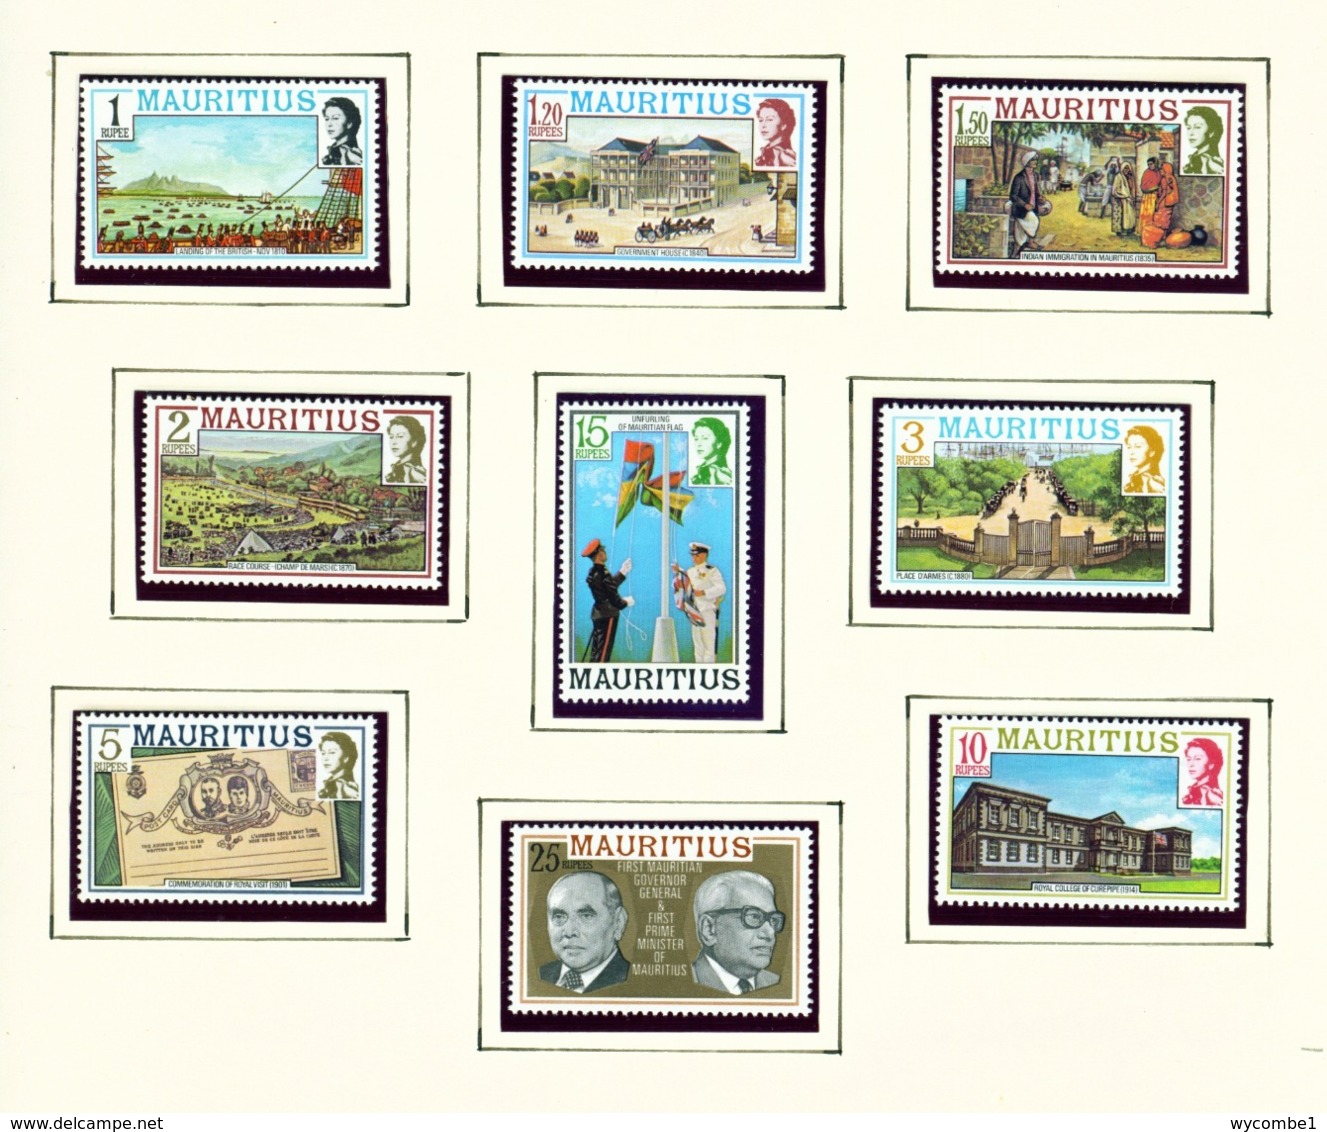 MAURITIUS - 1978 Definitives Set Unmounted/Never Hinged Mint - Mauritius (1968-...)